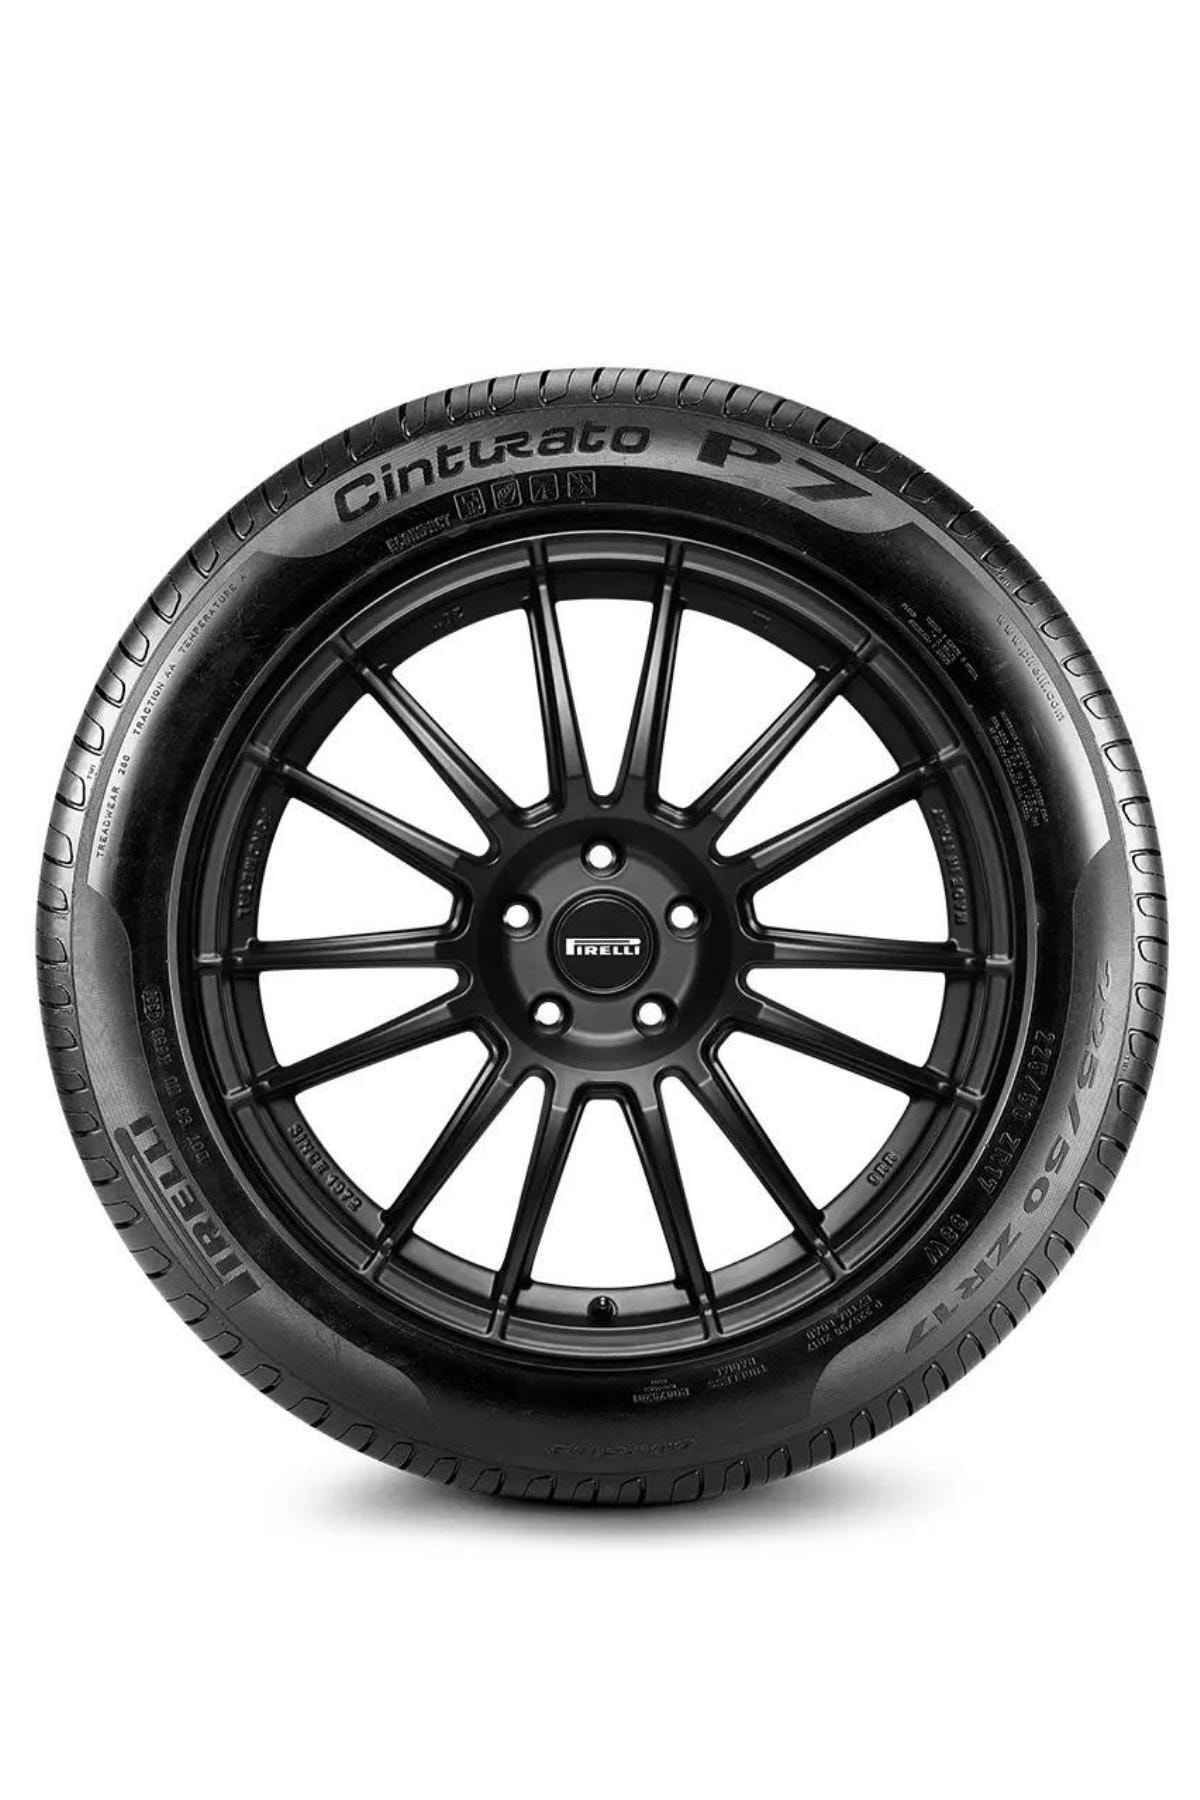 Pirelli 225/55r16 95w * Cinturato P7 Rft Spor Ve Sedan Otomobil Yaz Lastiği 2021